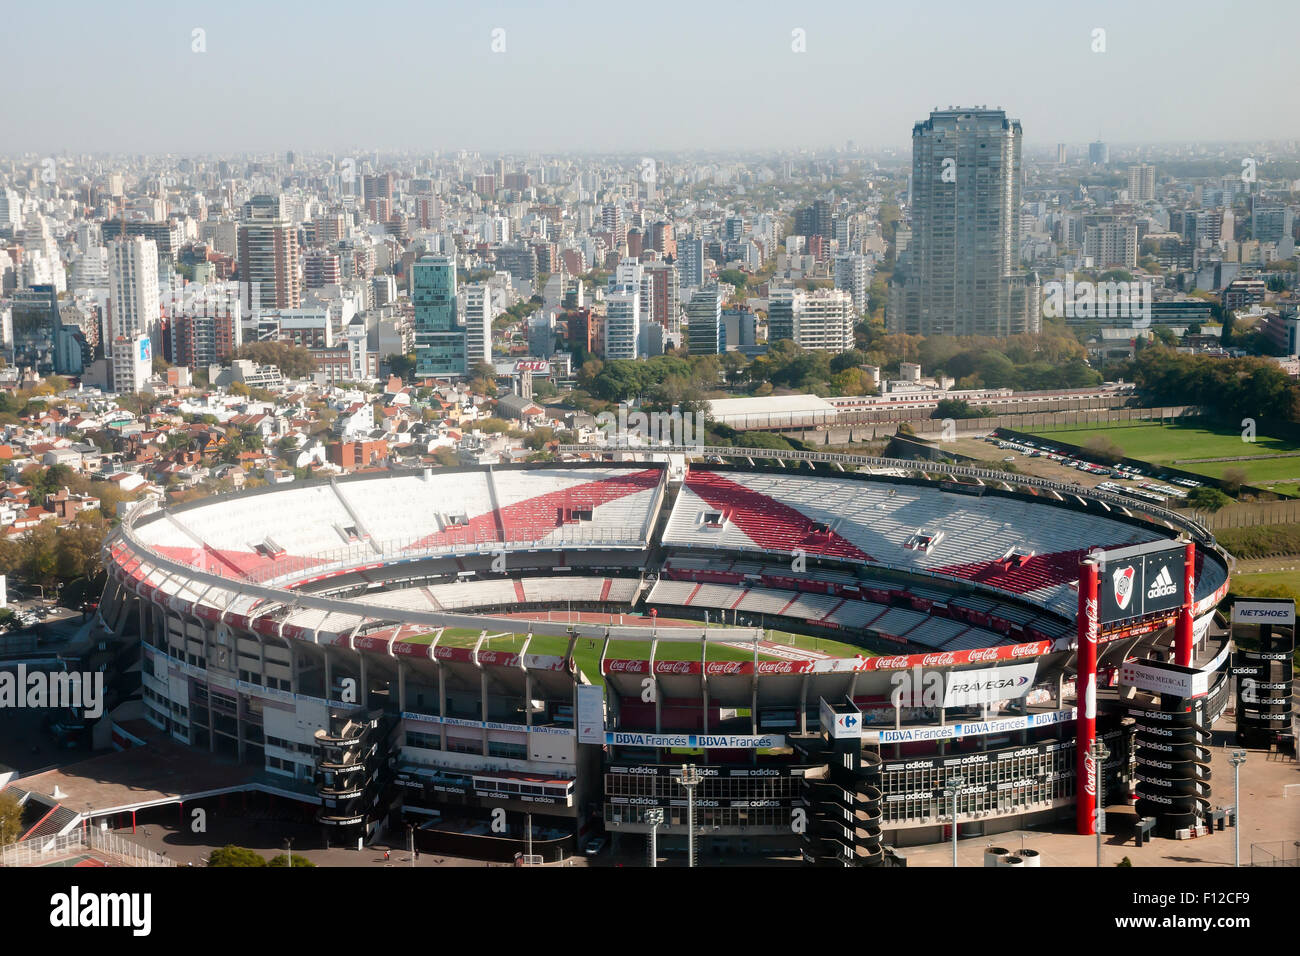 River Plate football team stadium - Buenos Aires - Argentina Stock Photo